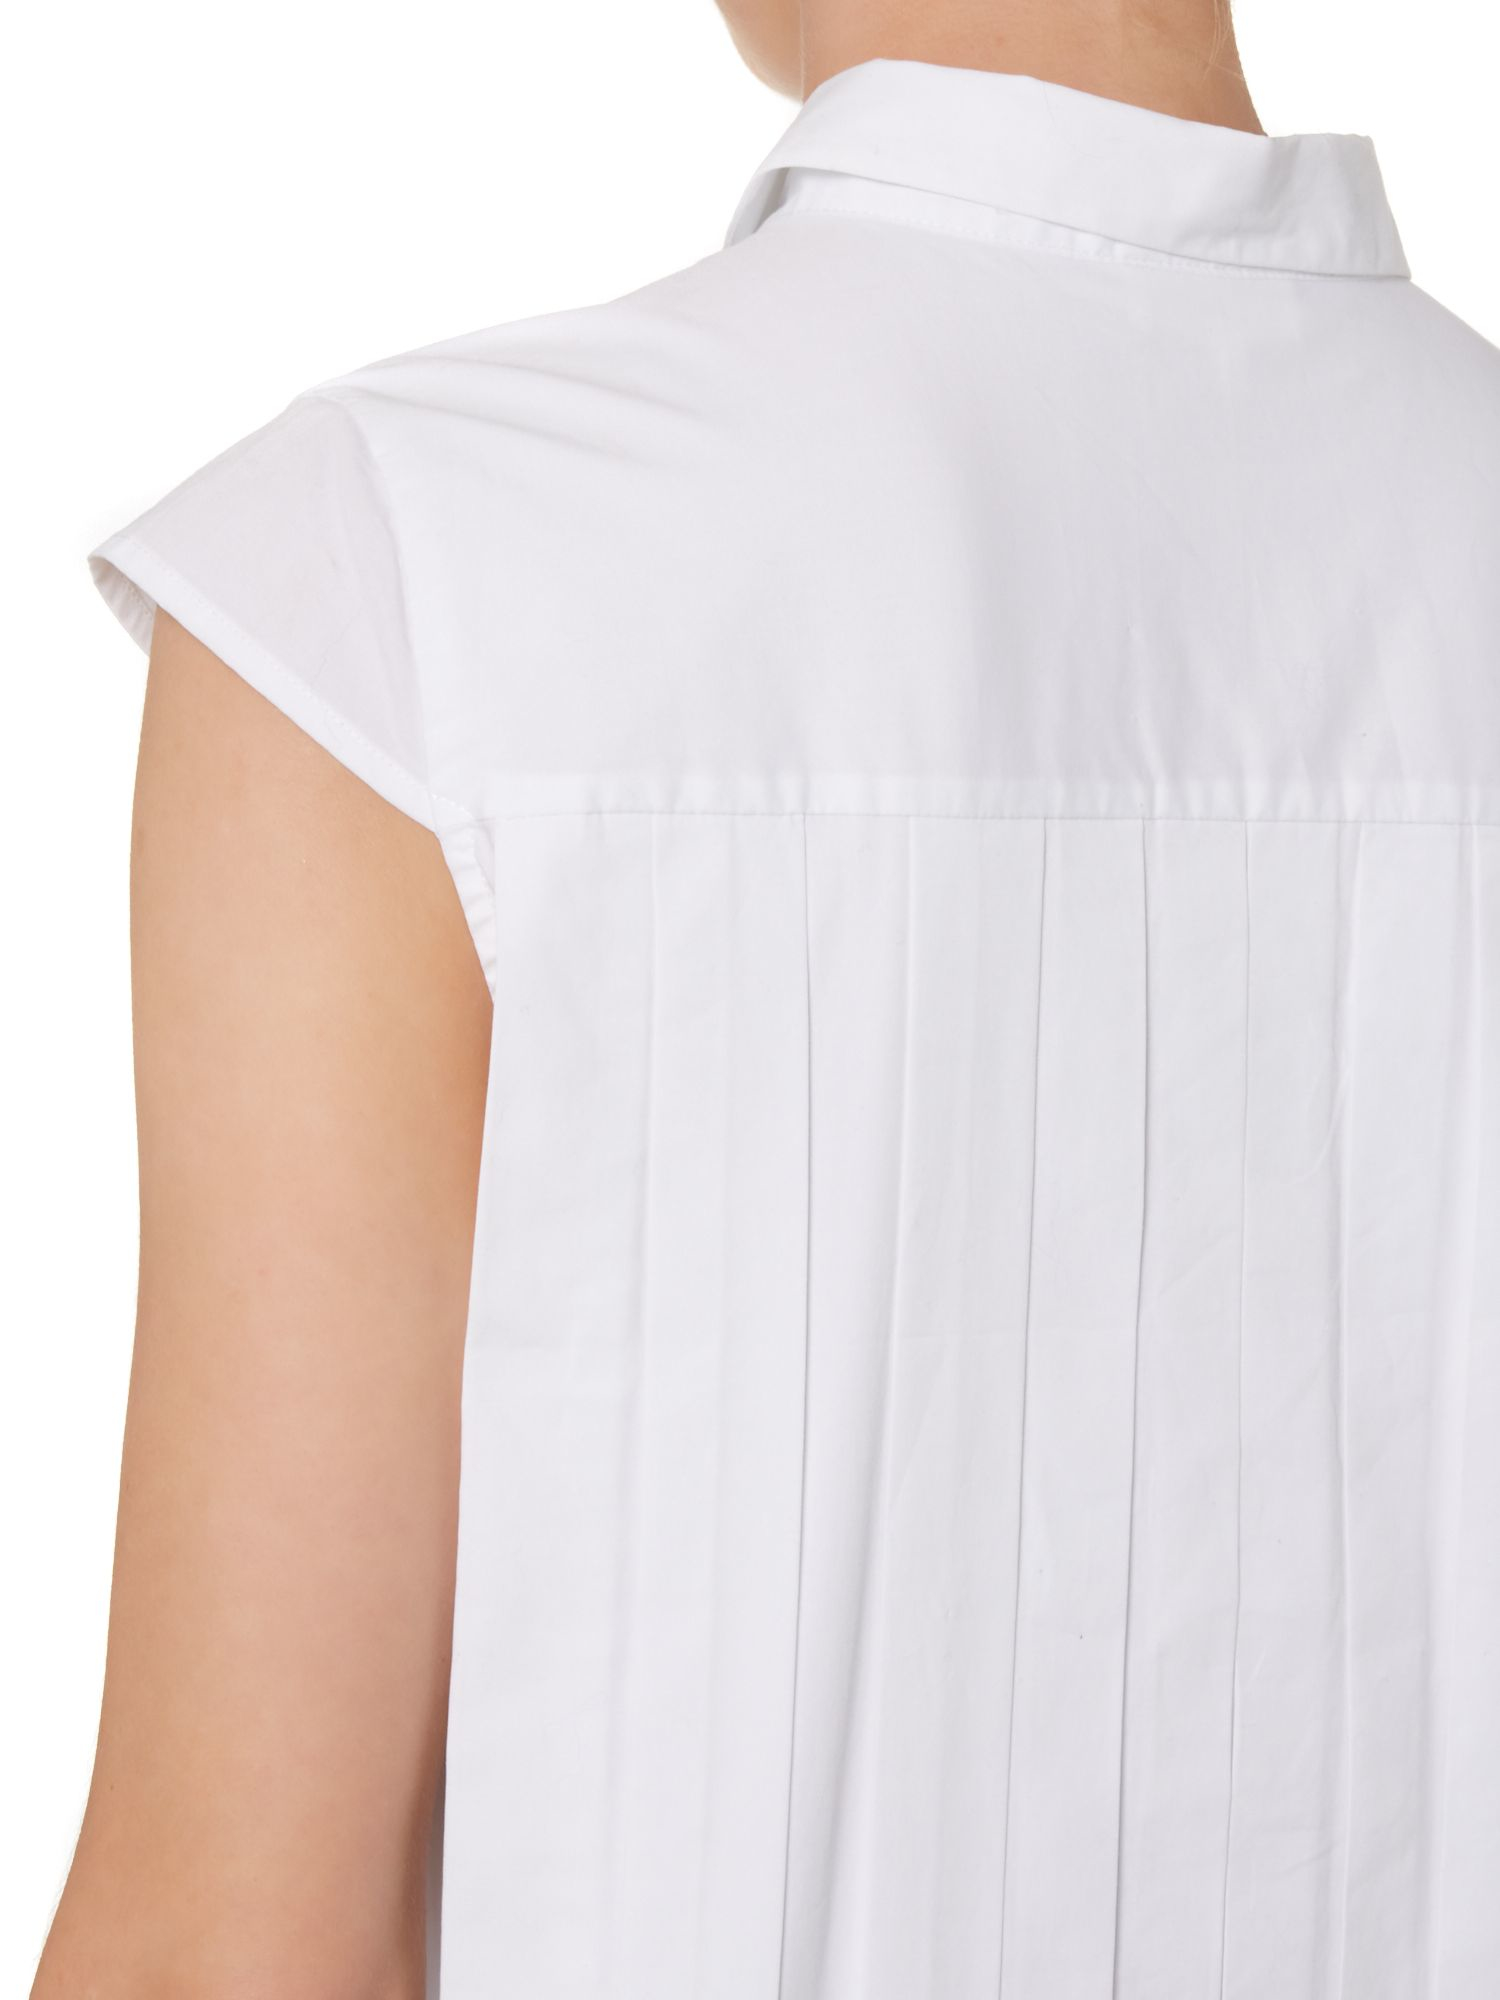 Linea Pleat Back Shirt in White